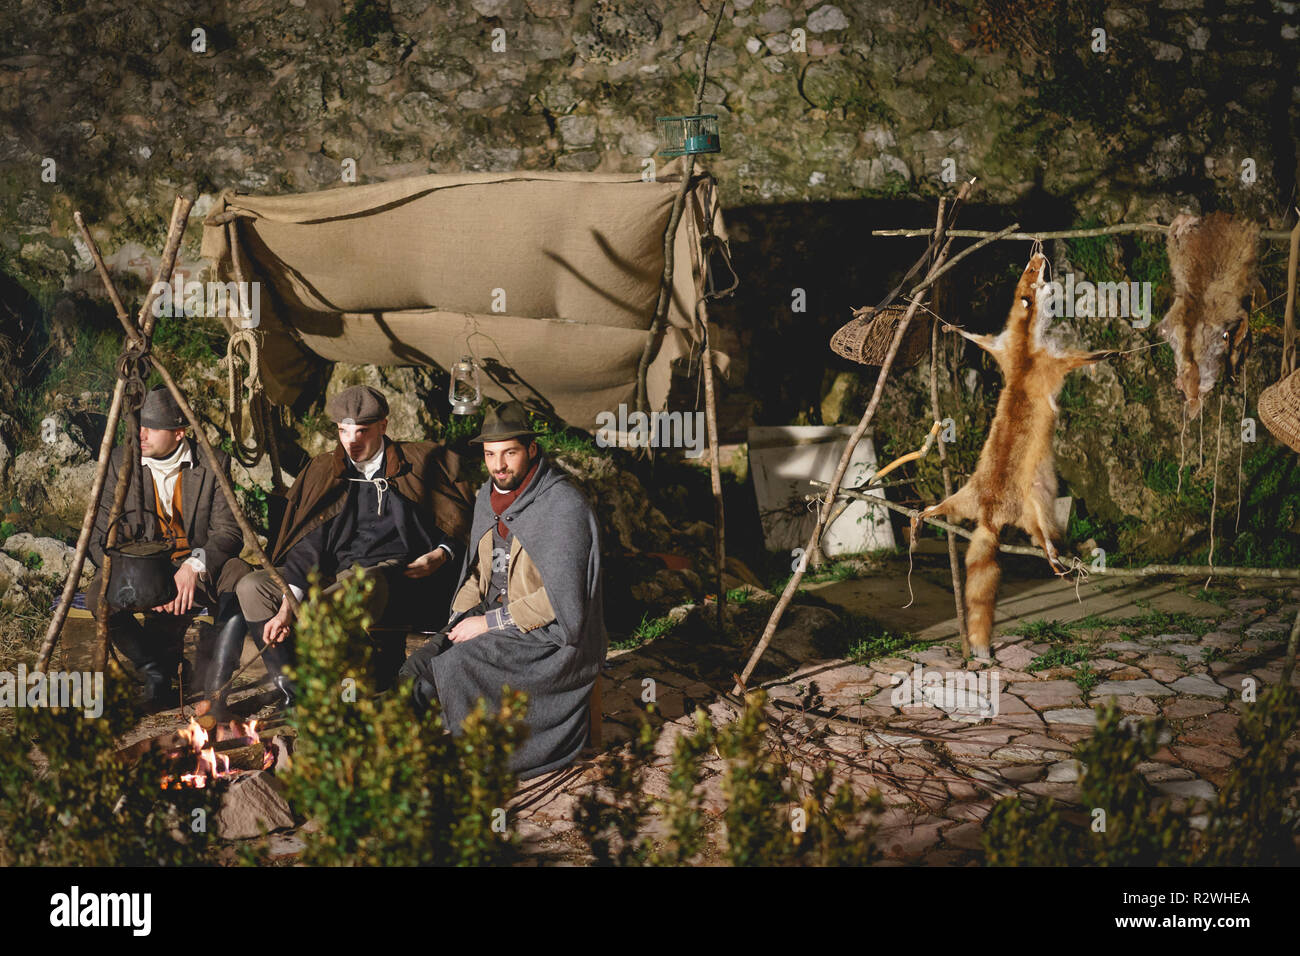 Rasiglia (Foligno), Italy - January 2018. Hunters camping during a living Christmas Nativity scene reenactment. Stock Photo